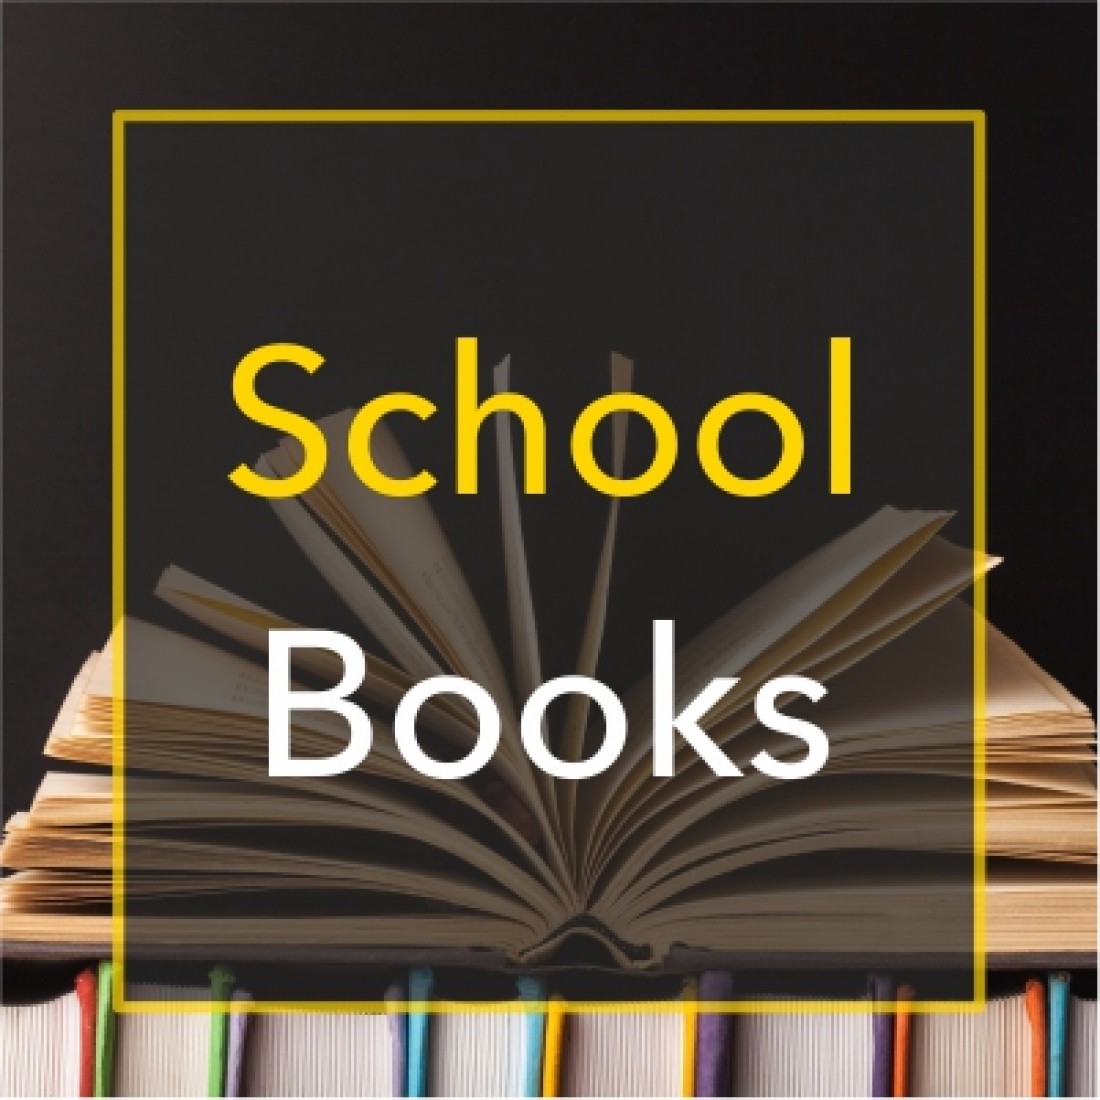 Books for all schools